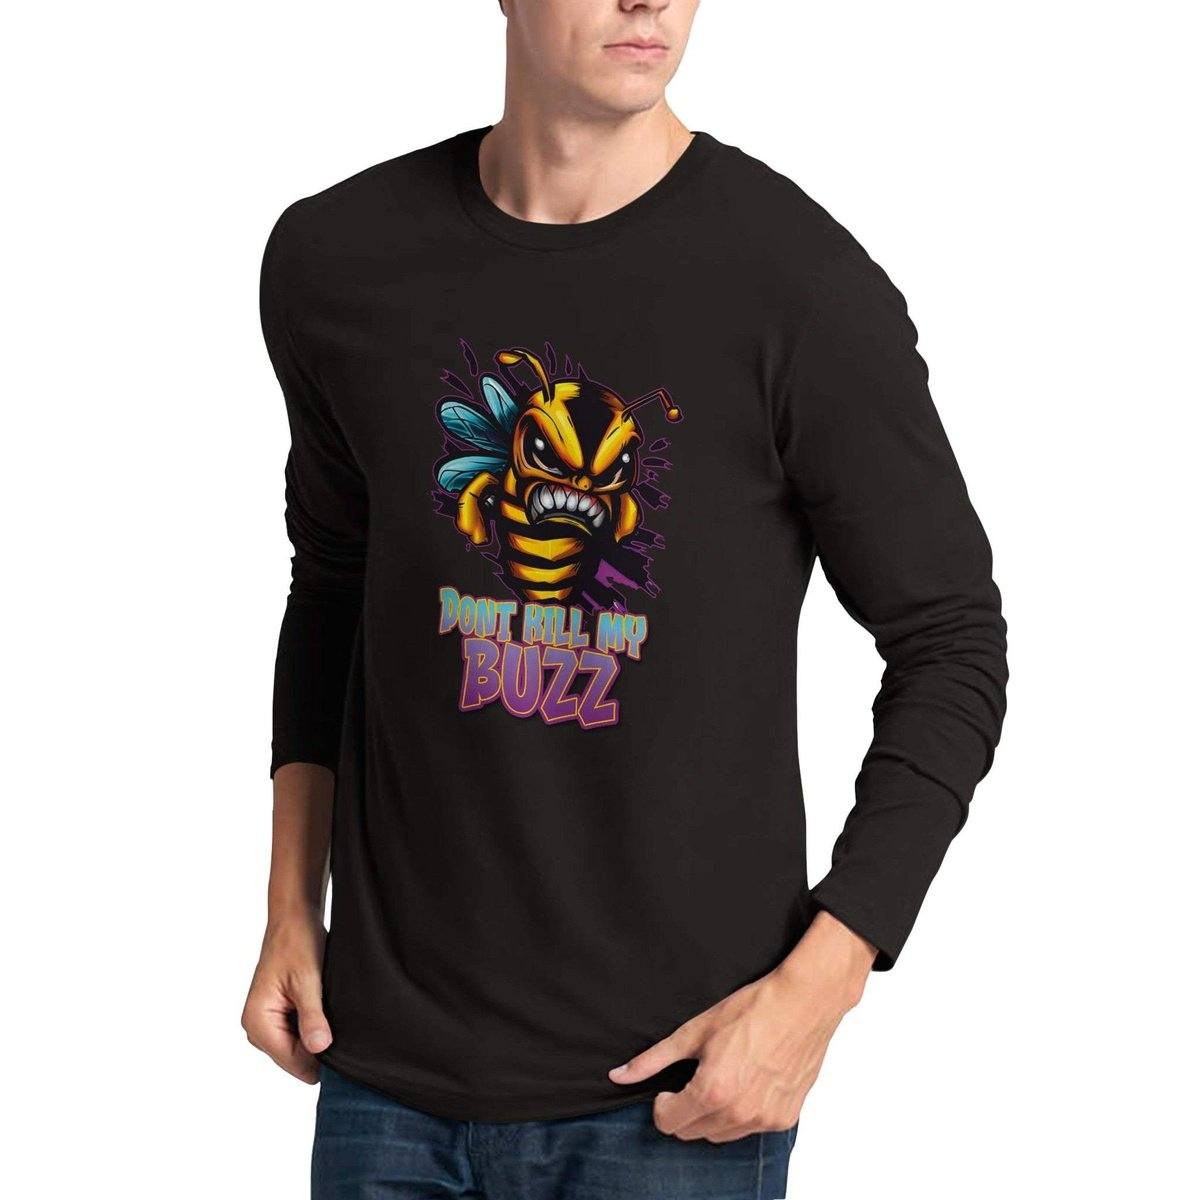 Dont Kill My Buzz Long sleeve T-shirt Australia Online Color